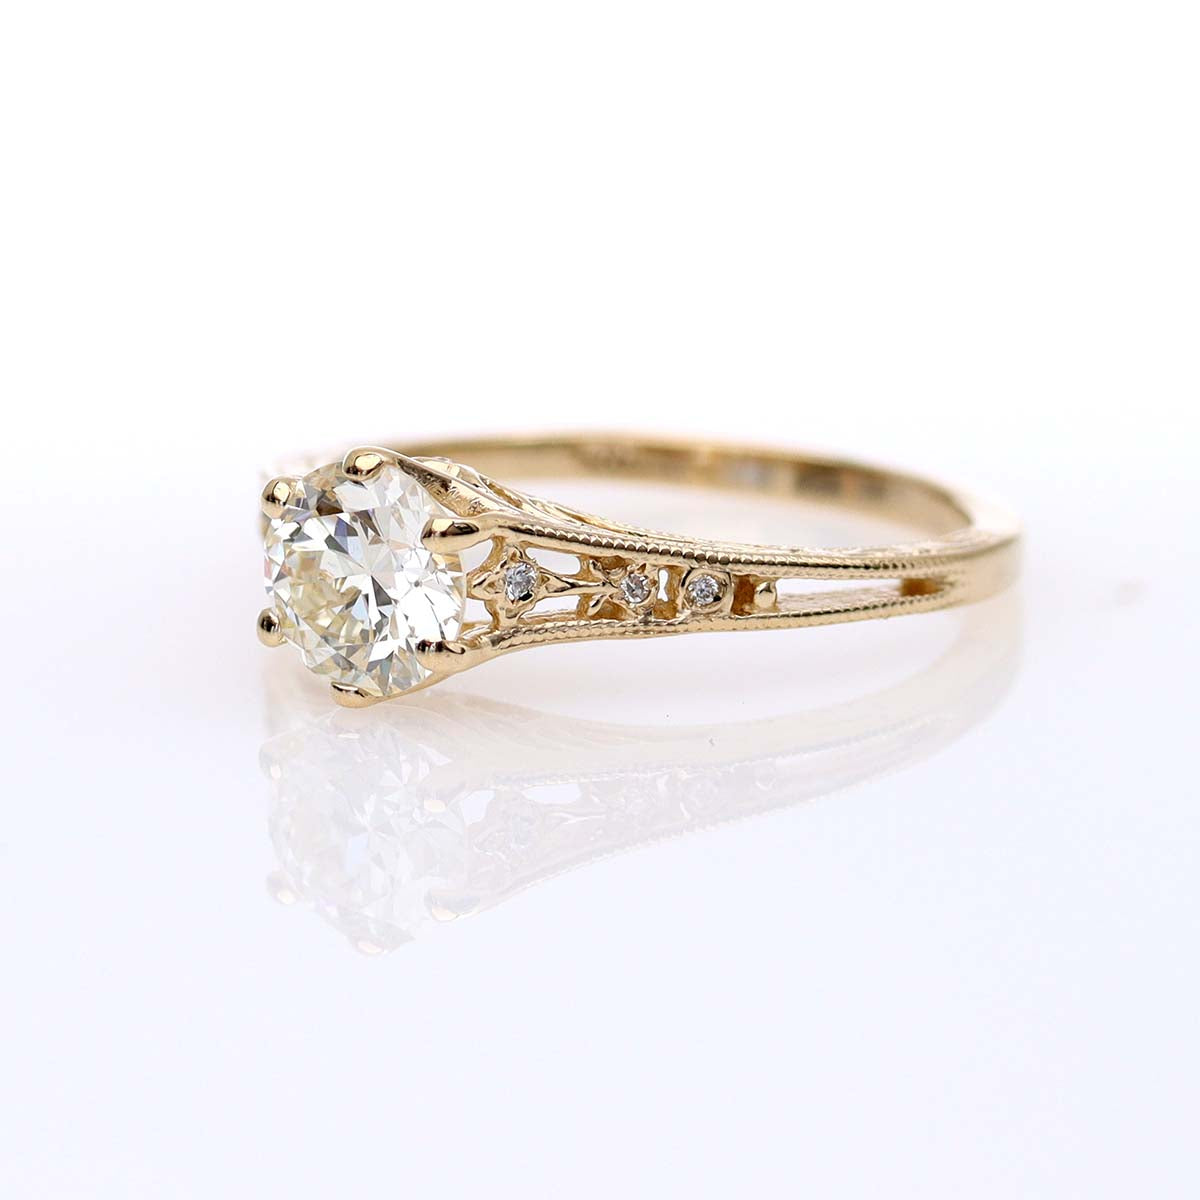 Enchanting Edwardian Revival Engagement Ring #3330-10